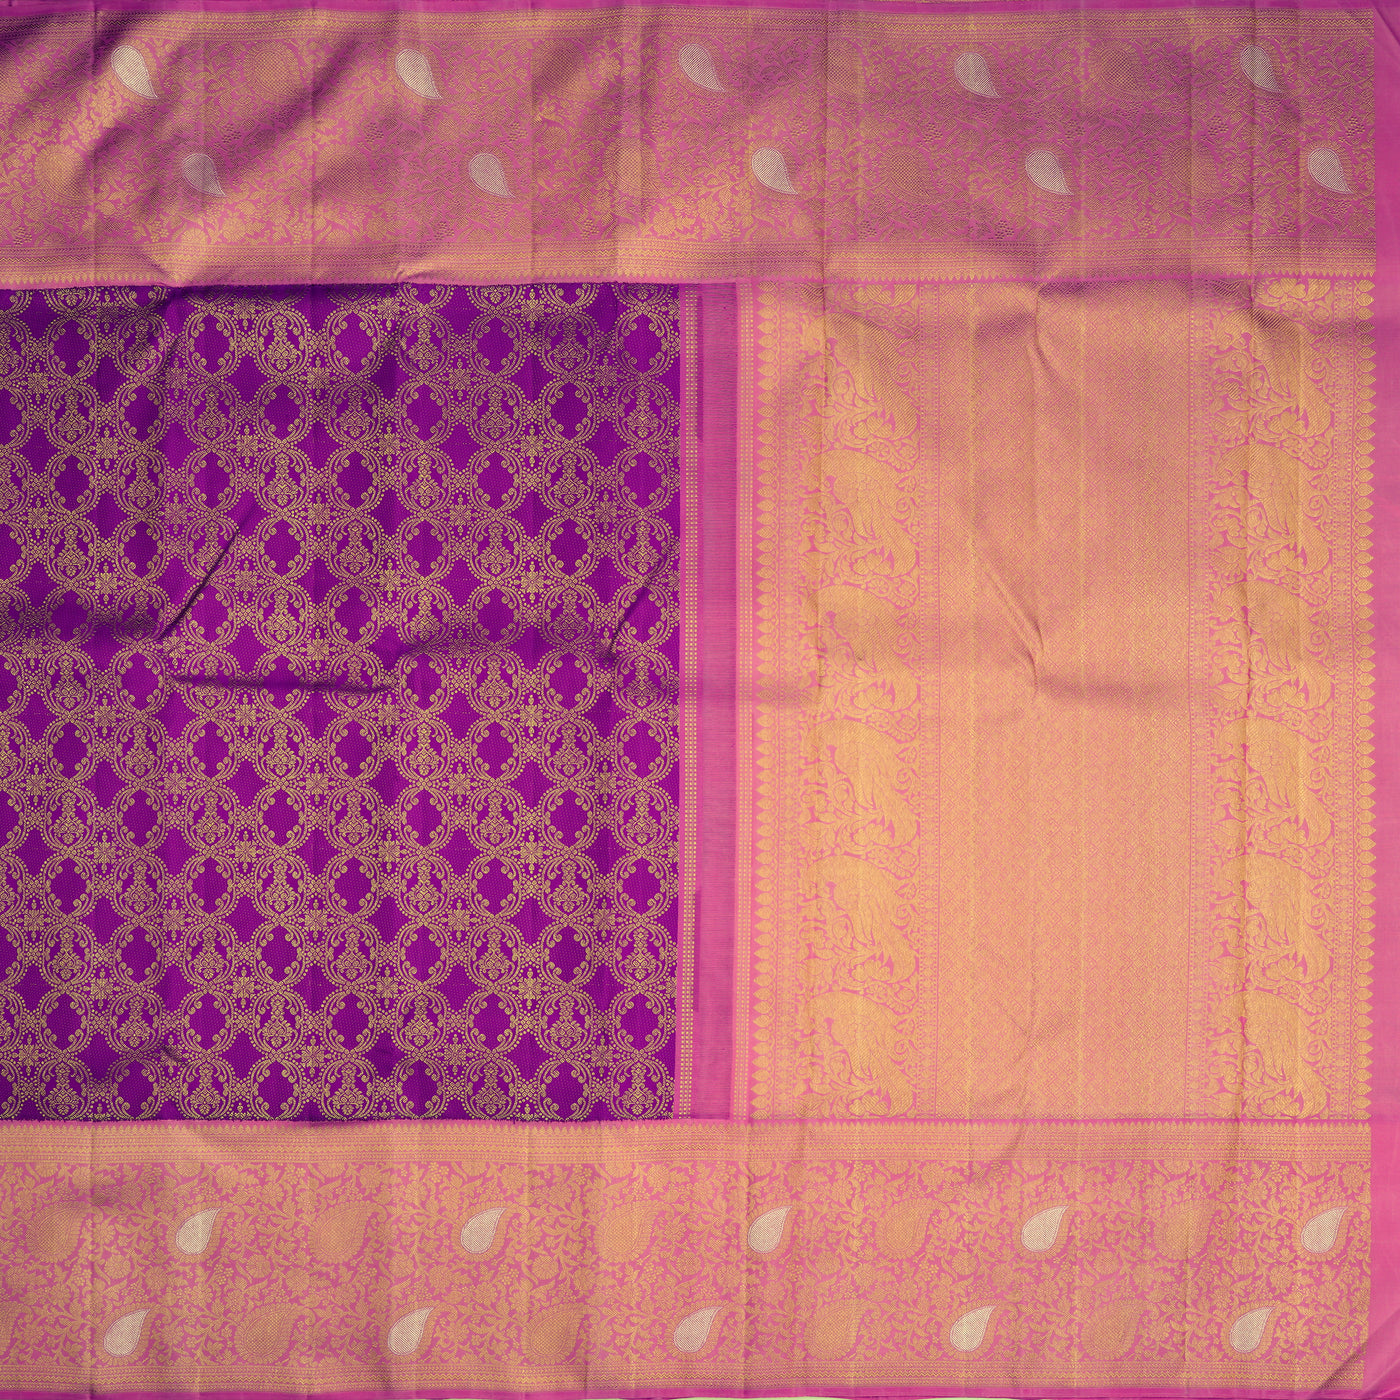 Magenta Kanchipuram Silk Saree with Sprial Design